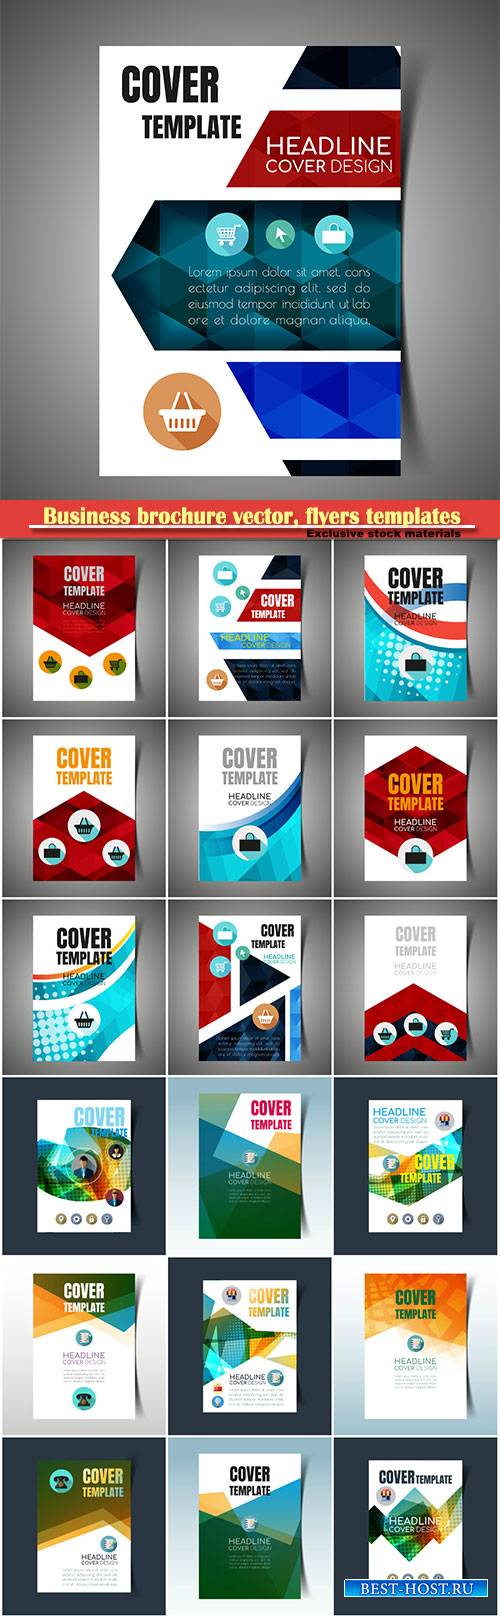 Business brochure vector, flyers templates, report cover design # 94